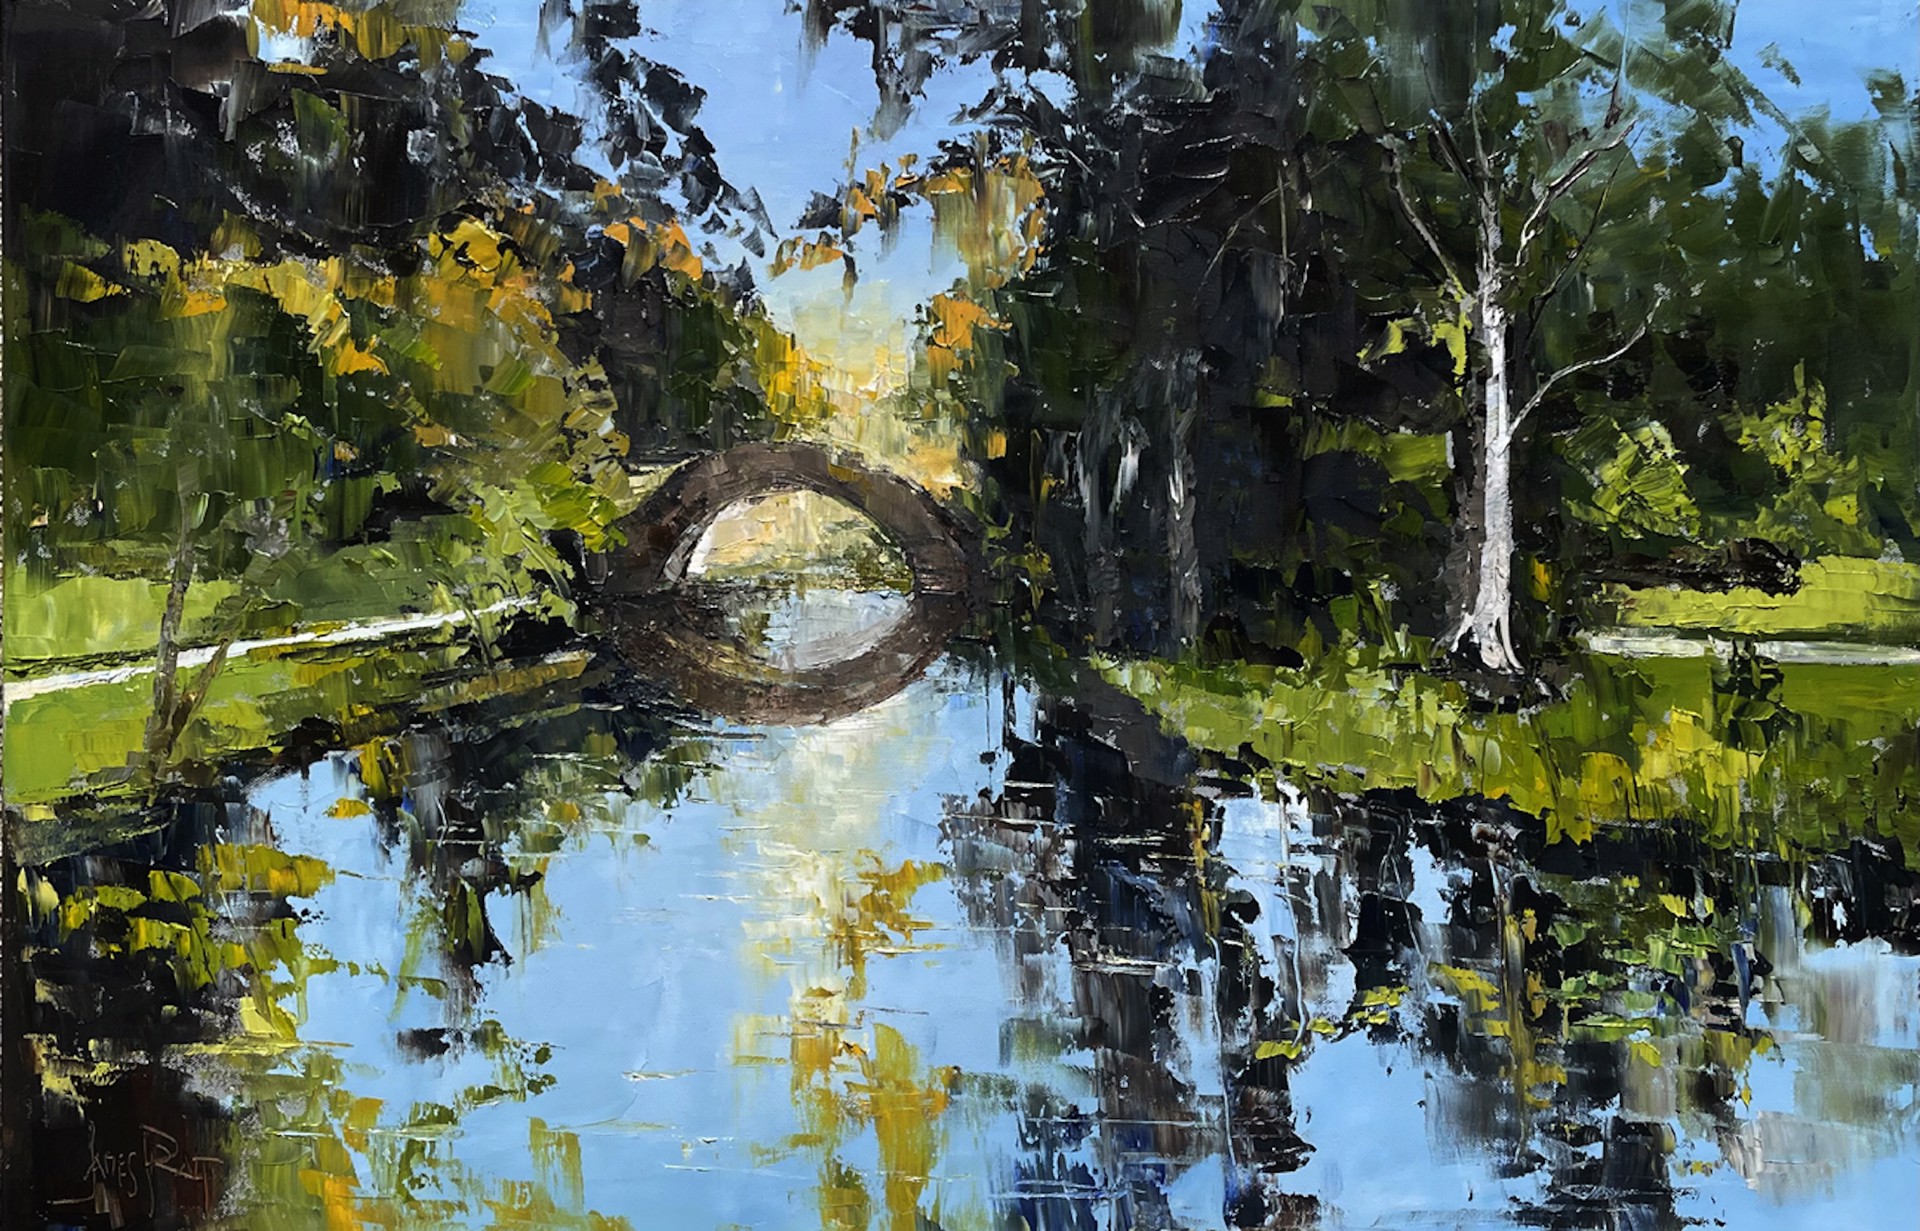 Wendover Bridge Reflections by James Pratt